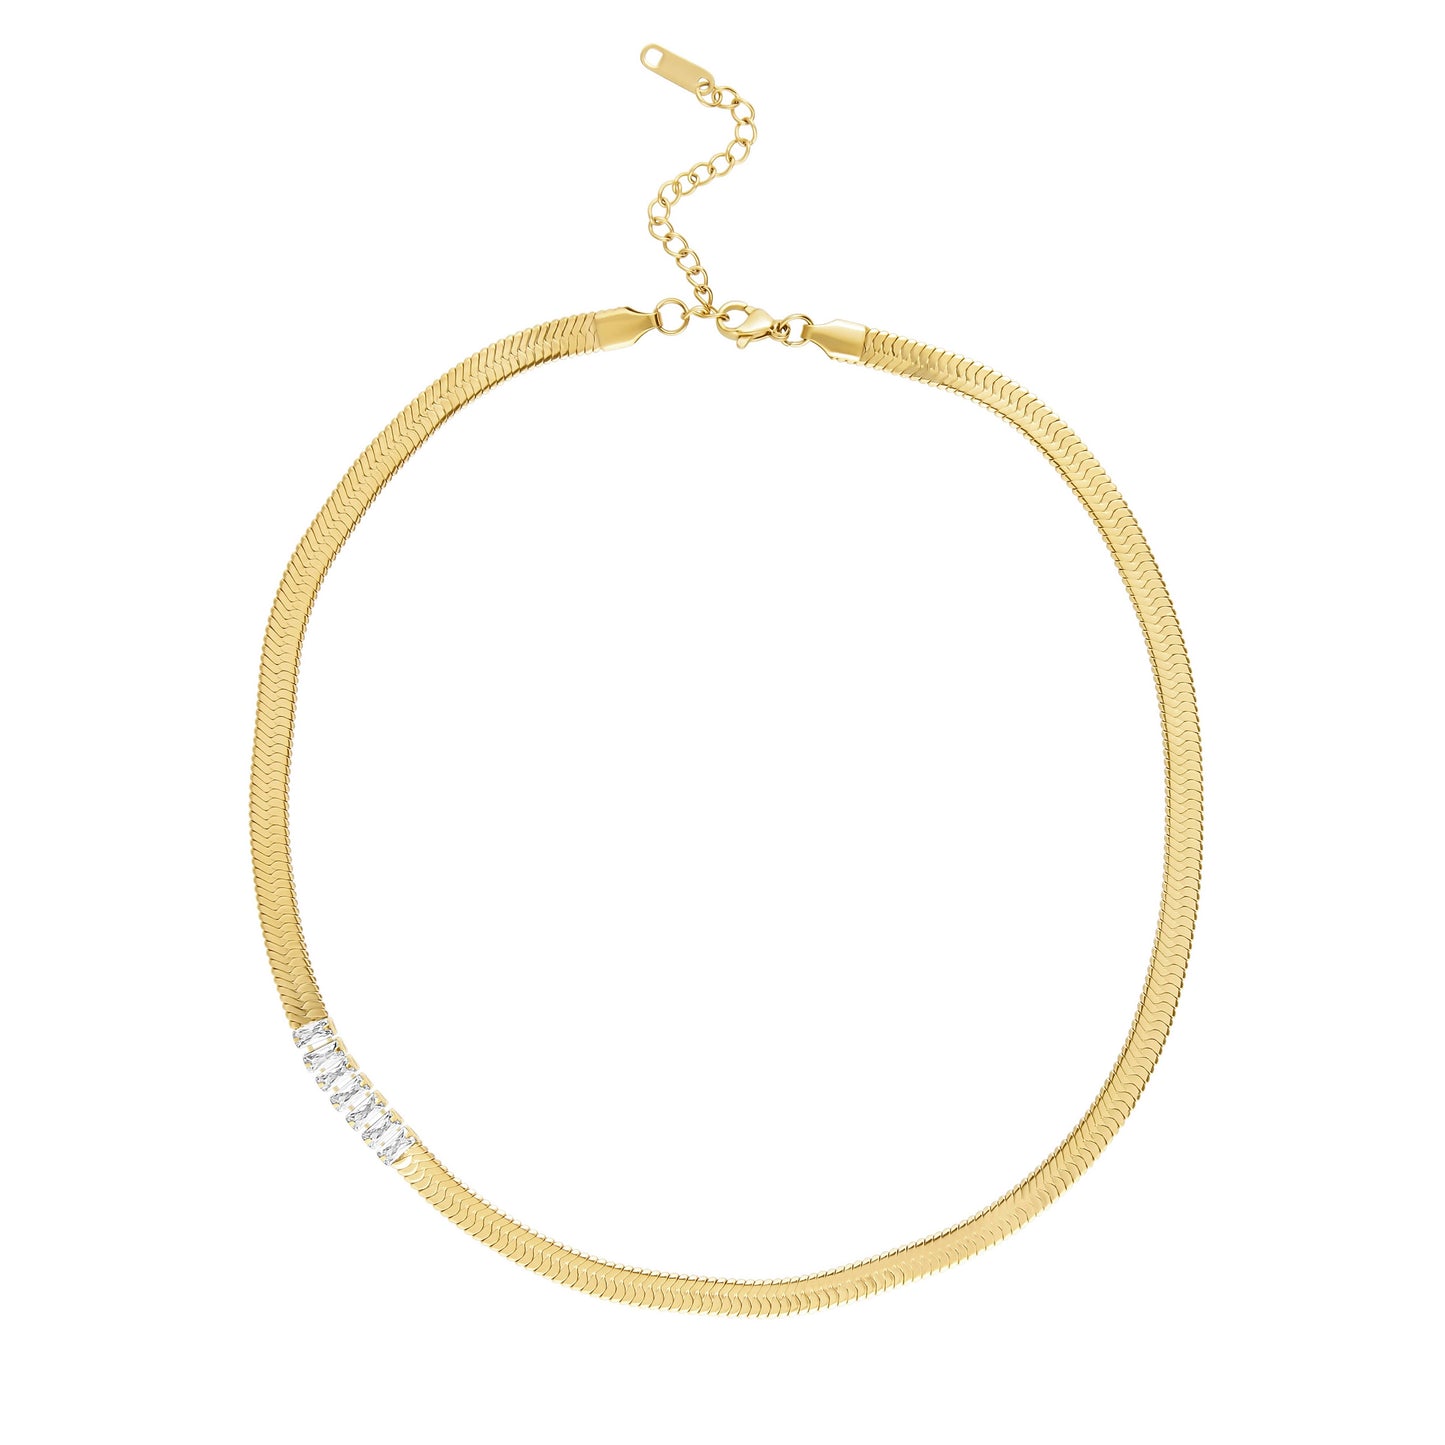 Sahira Jewelry Design - Parker Snake Chain